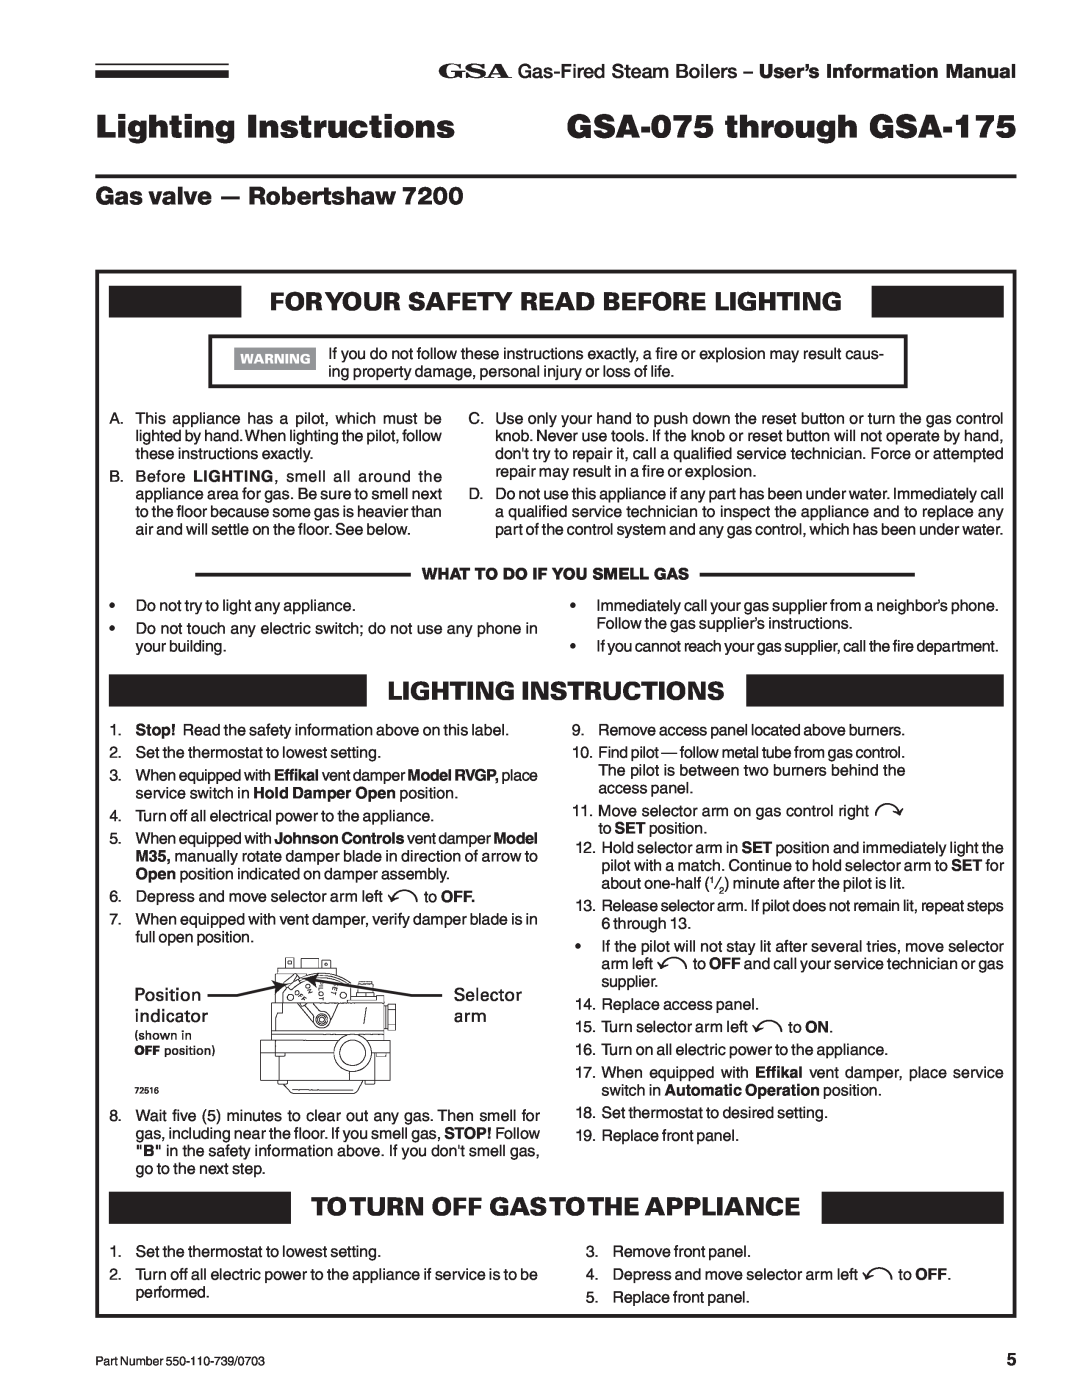 Honeywell RVGP Lighting Instructions, GSA-075 through GSA-175, Gas valve - Robertshaw, Foryour Safety Read Before Lighting 